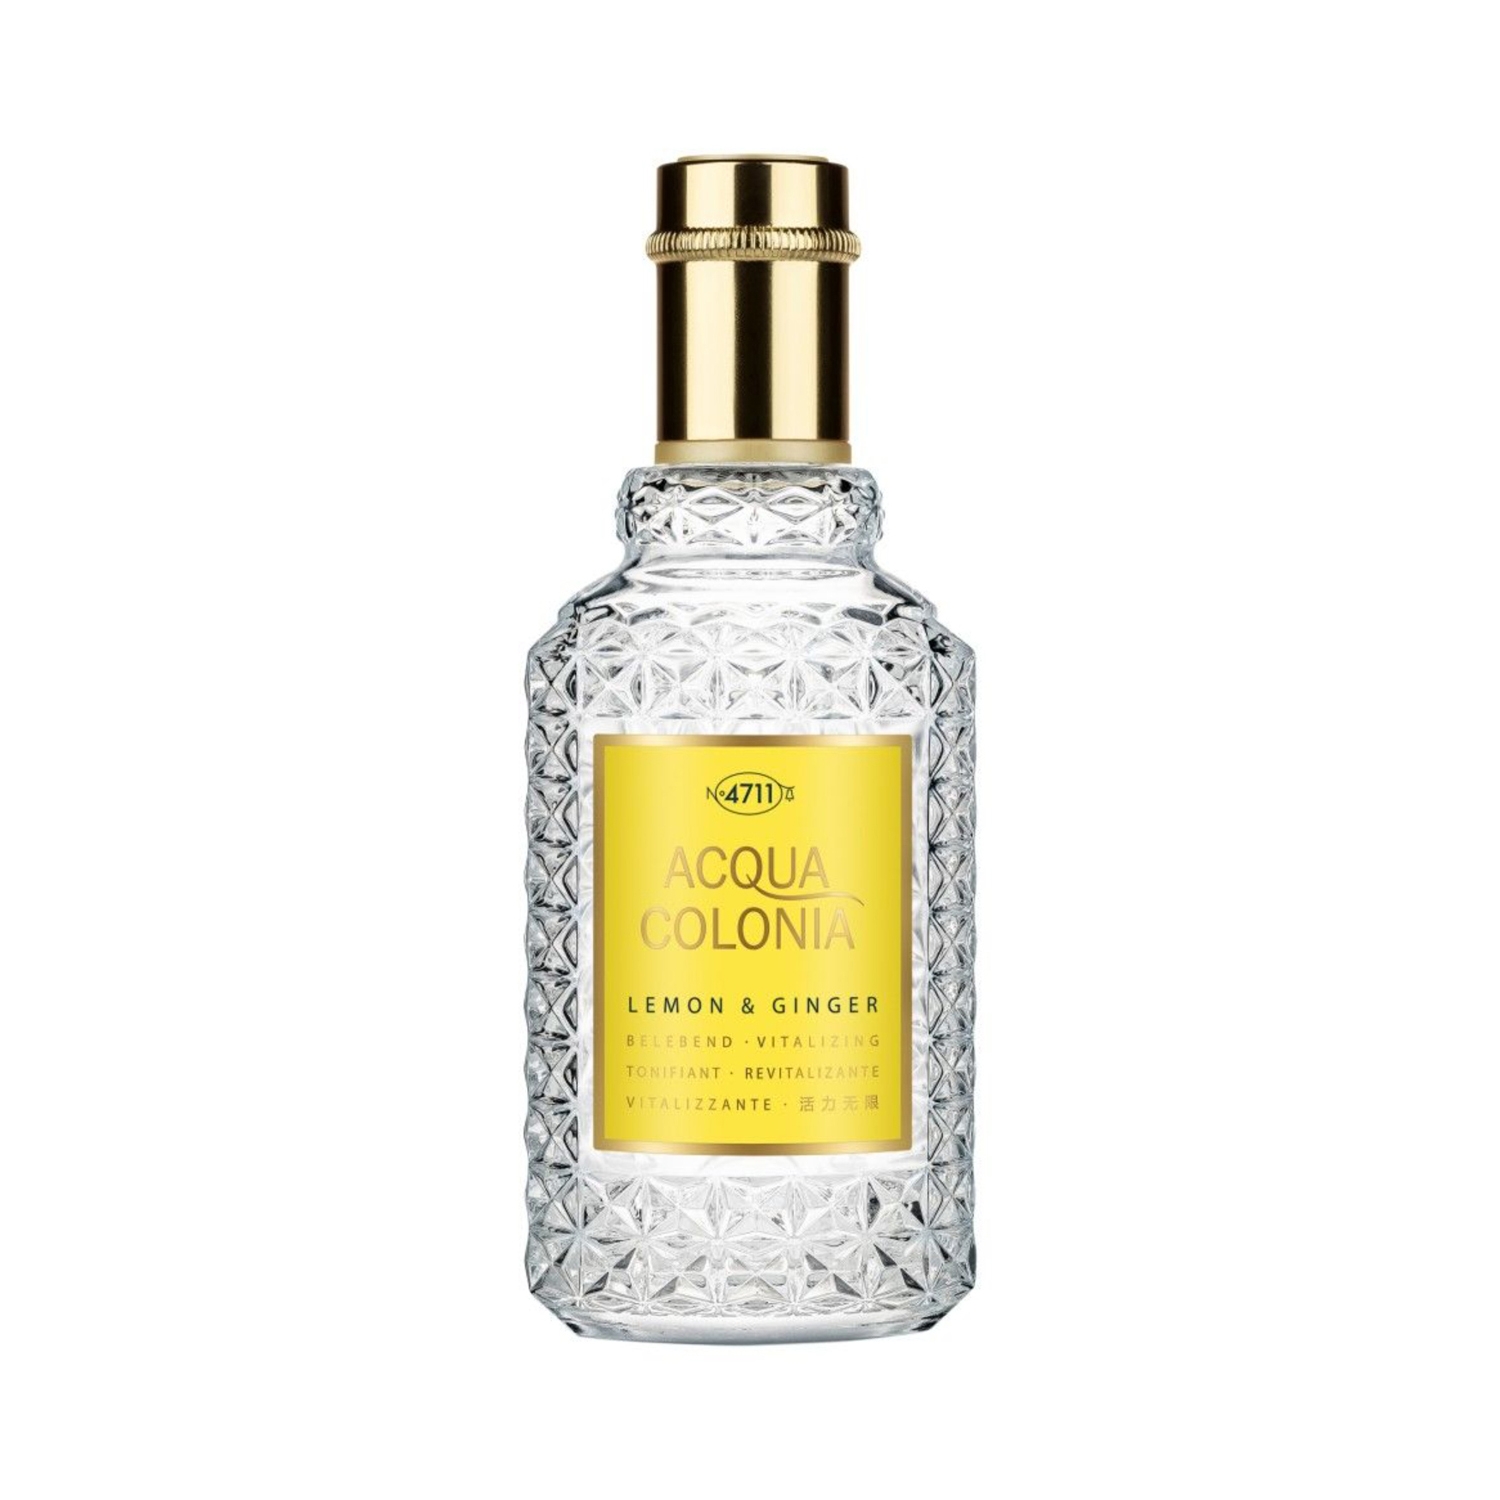 4711 Acqua Colonia Lemon & Ginger Eau De Cologne (50ml)